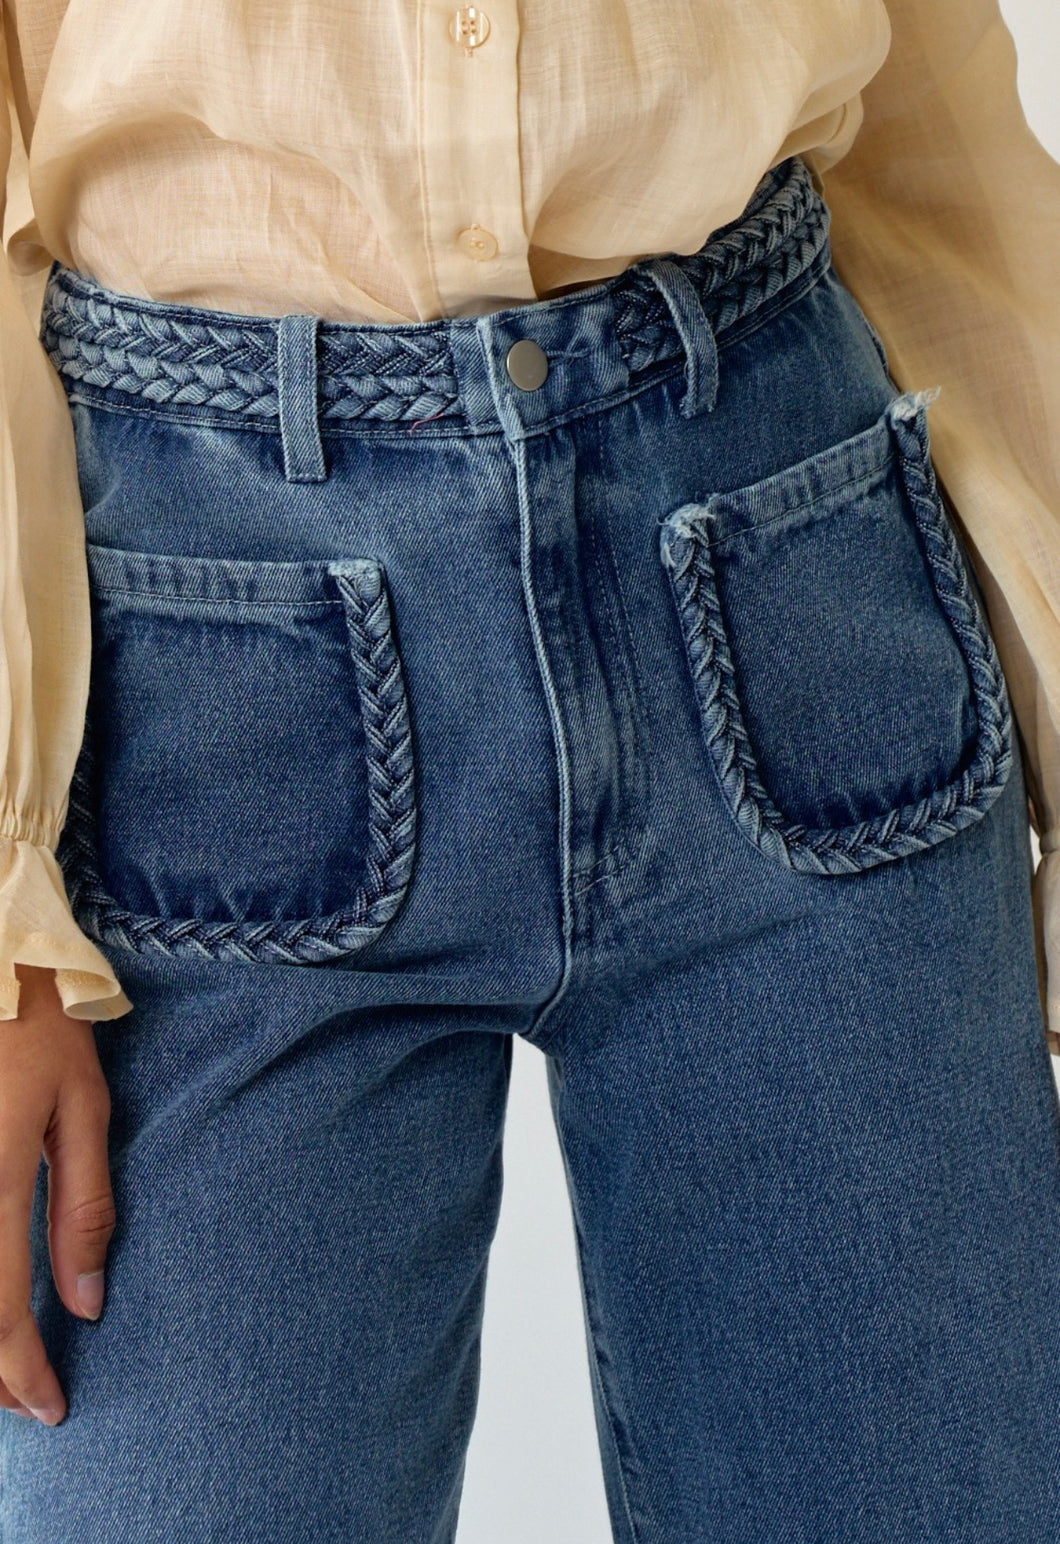 Braided Denim Jeans